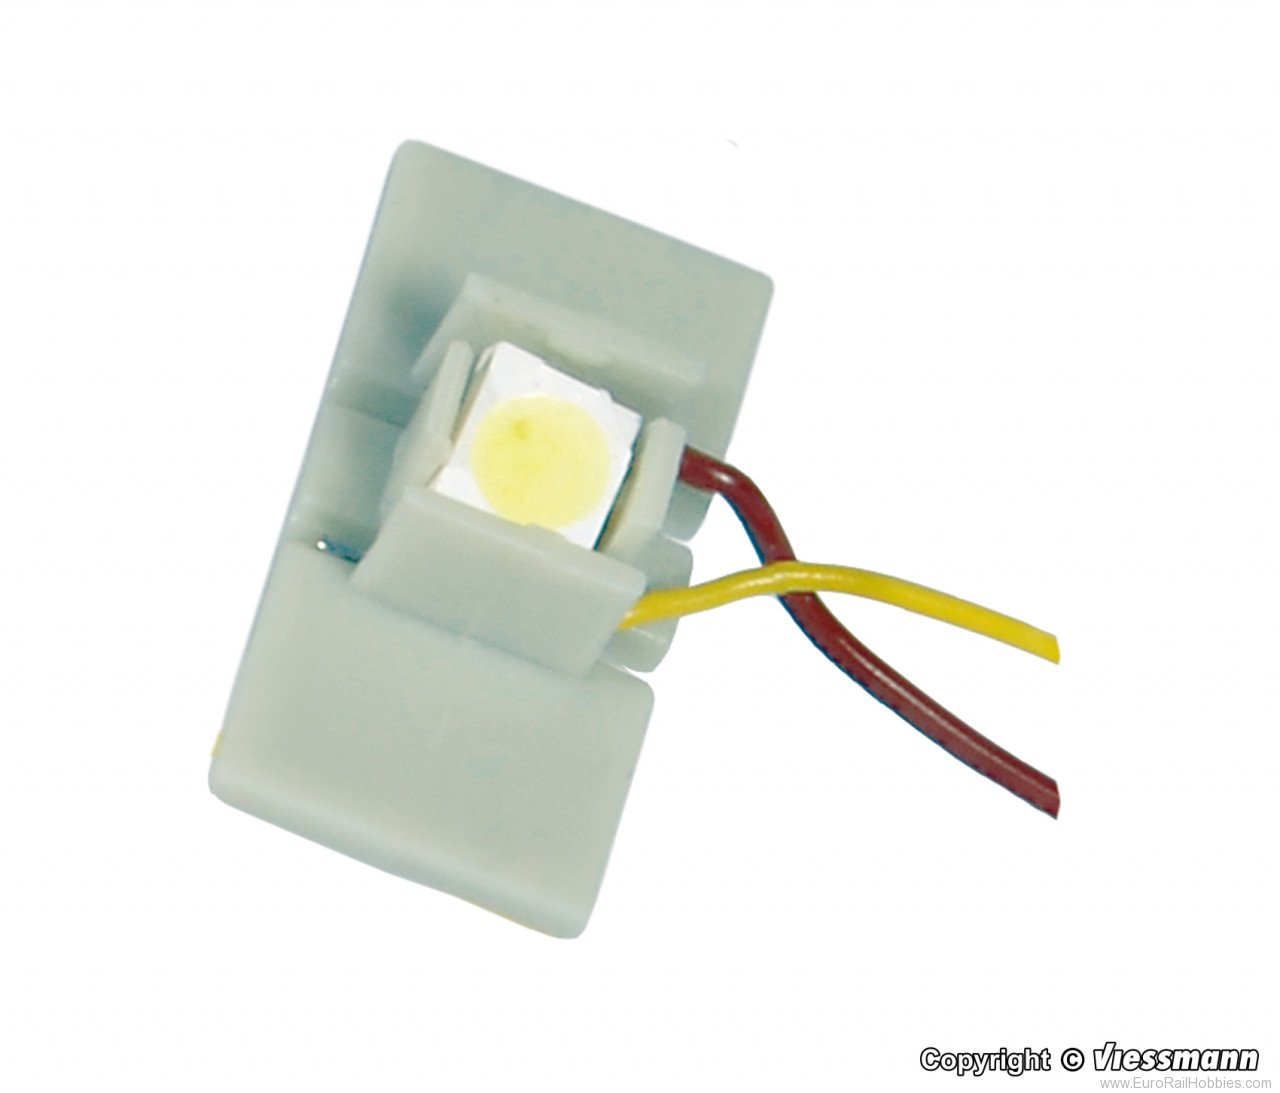 Viessmann 6047 LED for floor interior lighting yellow, 10 pi